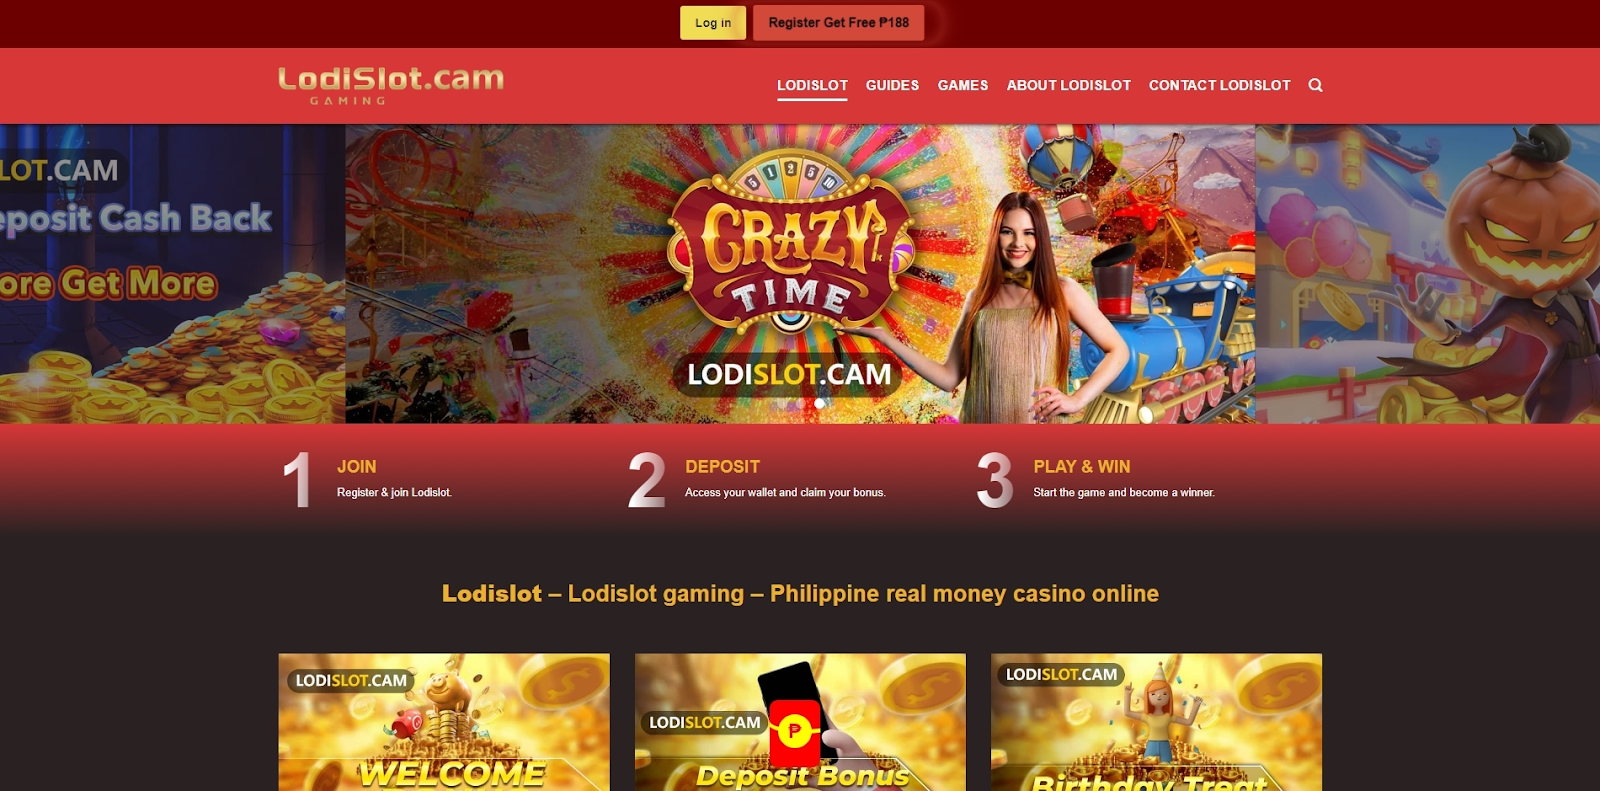 What is Lodi Slot Casino?